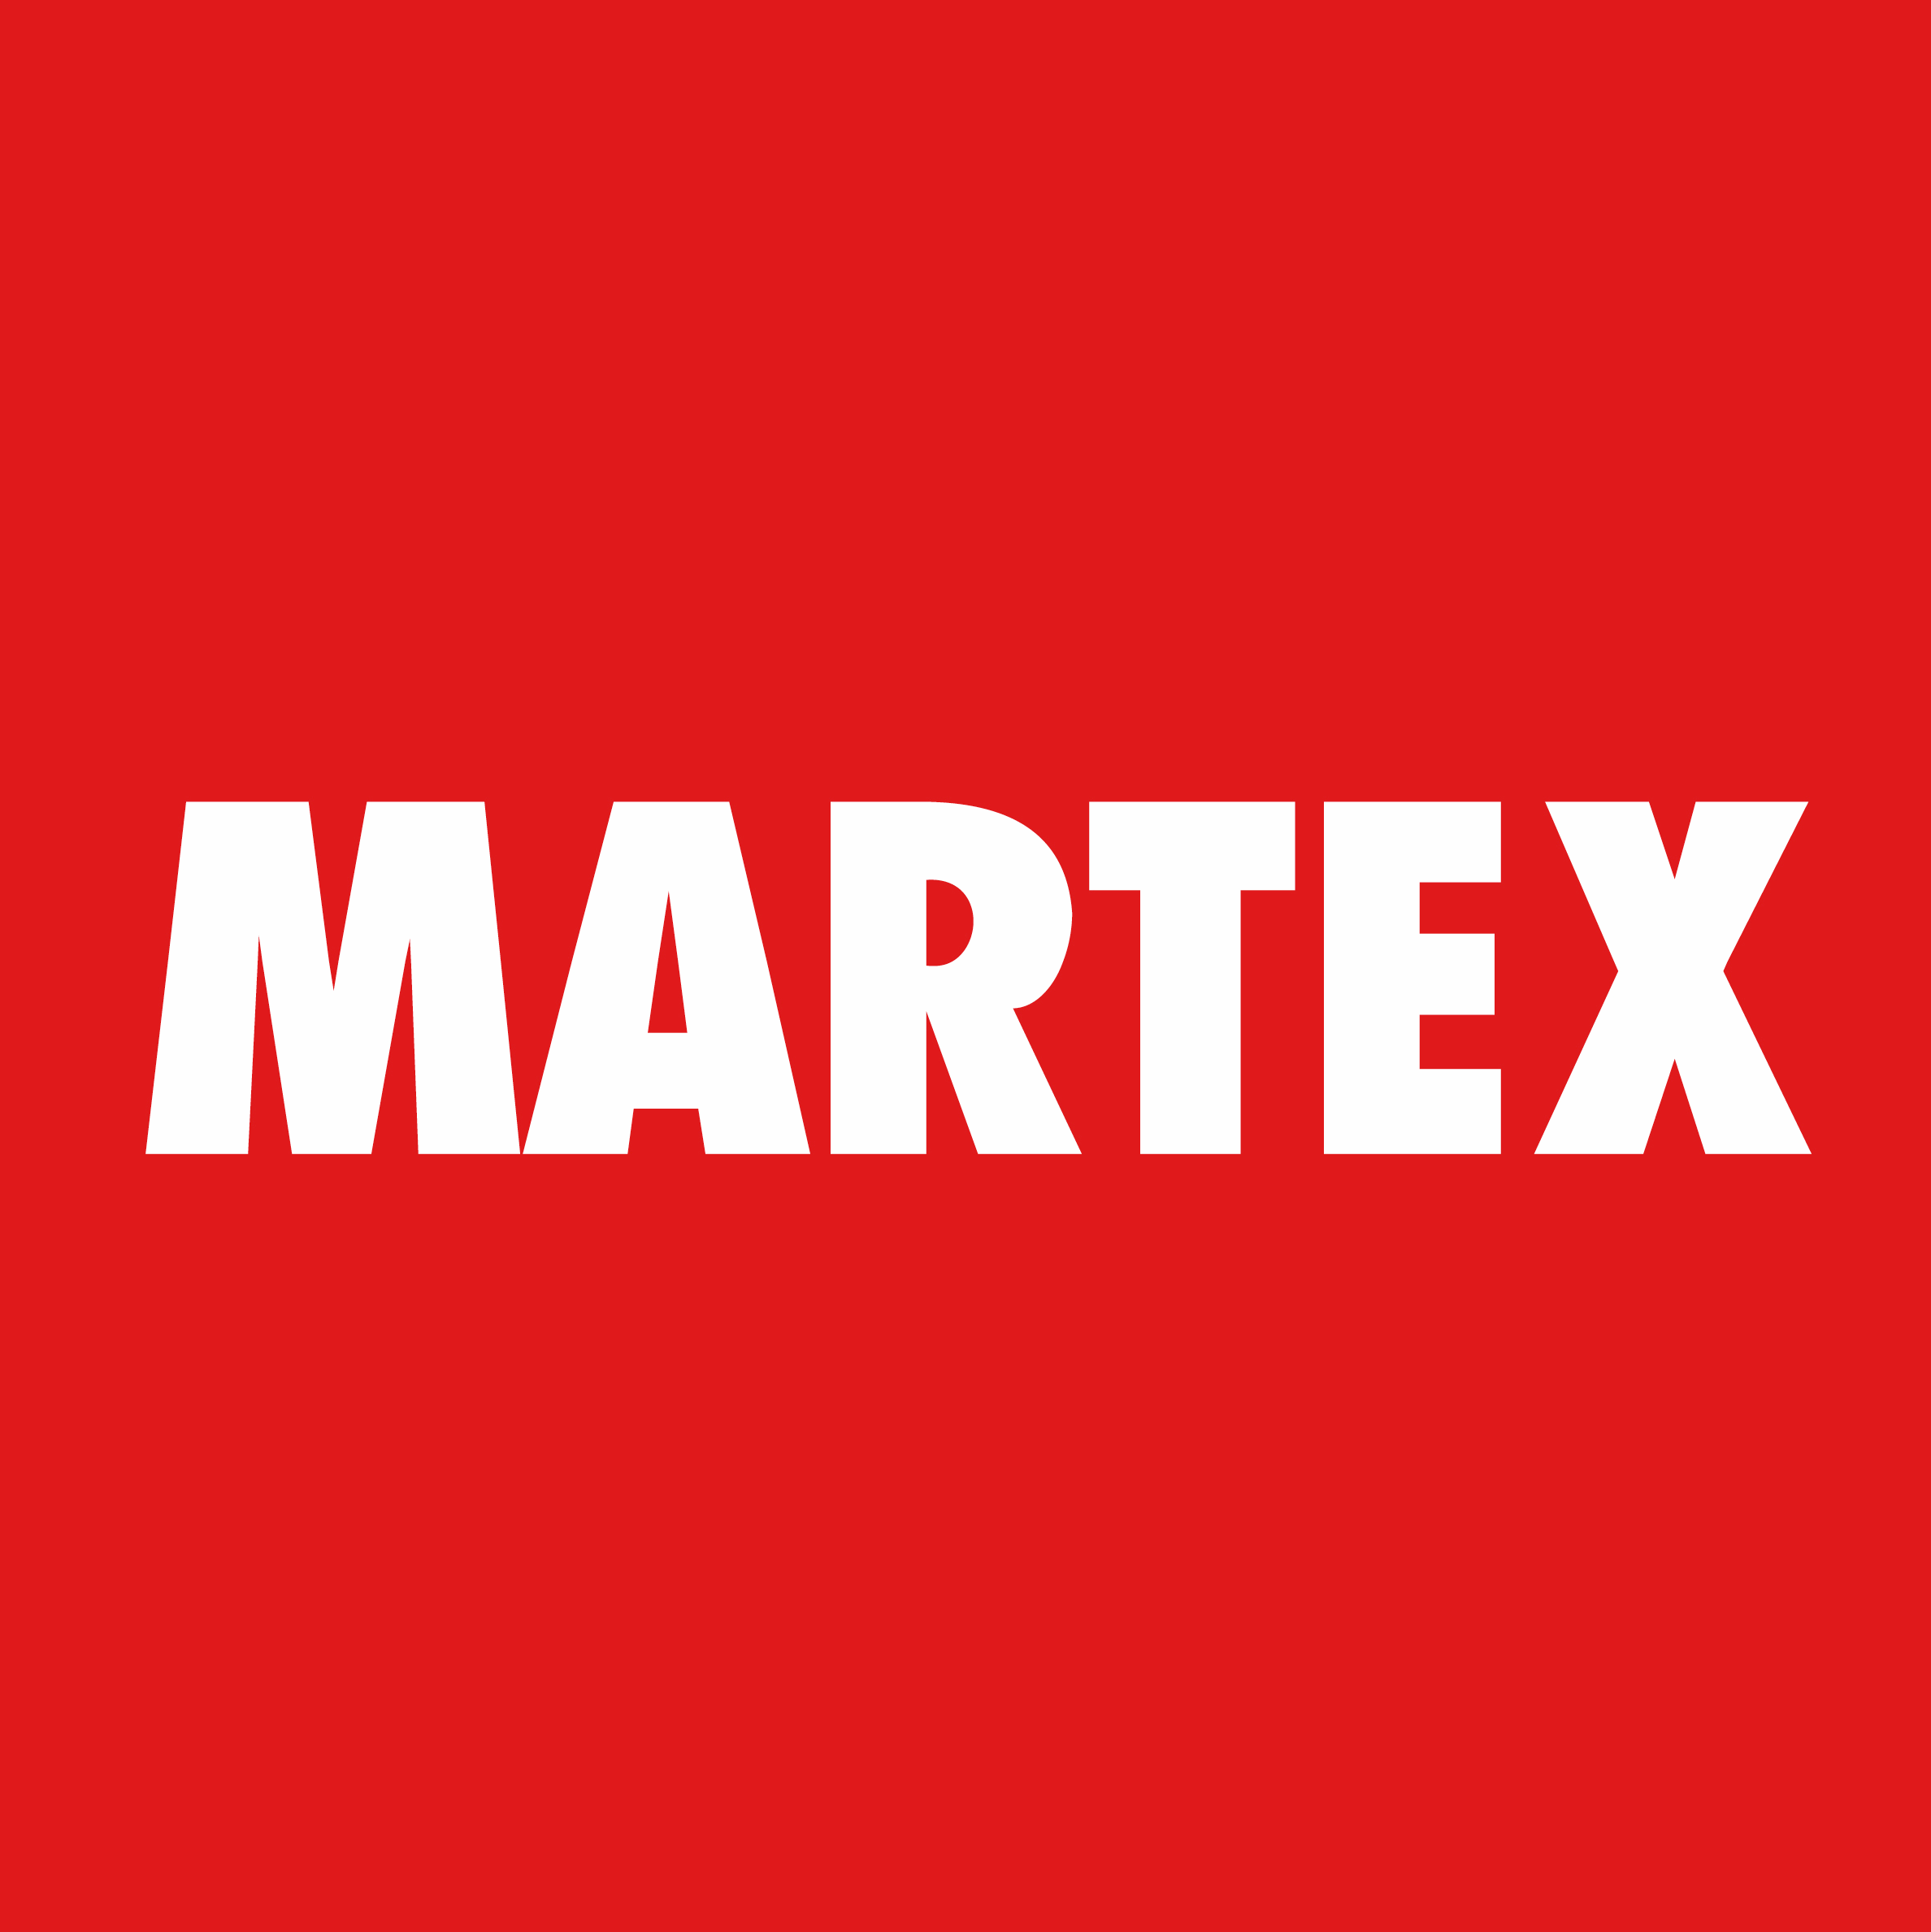 Martex-47abfd8a-log1